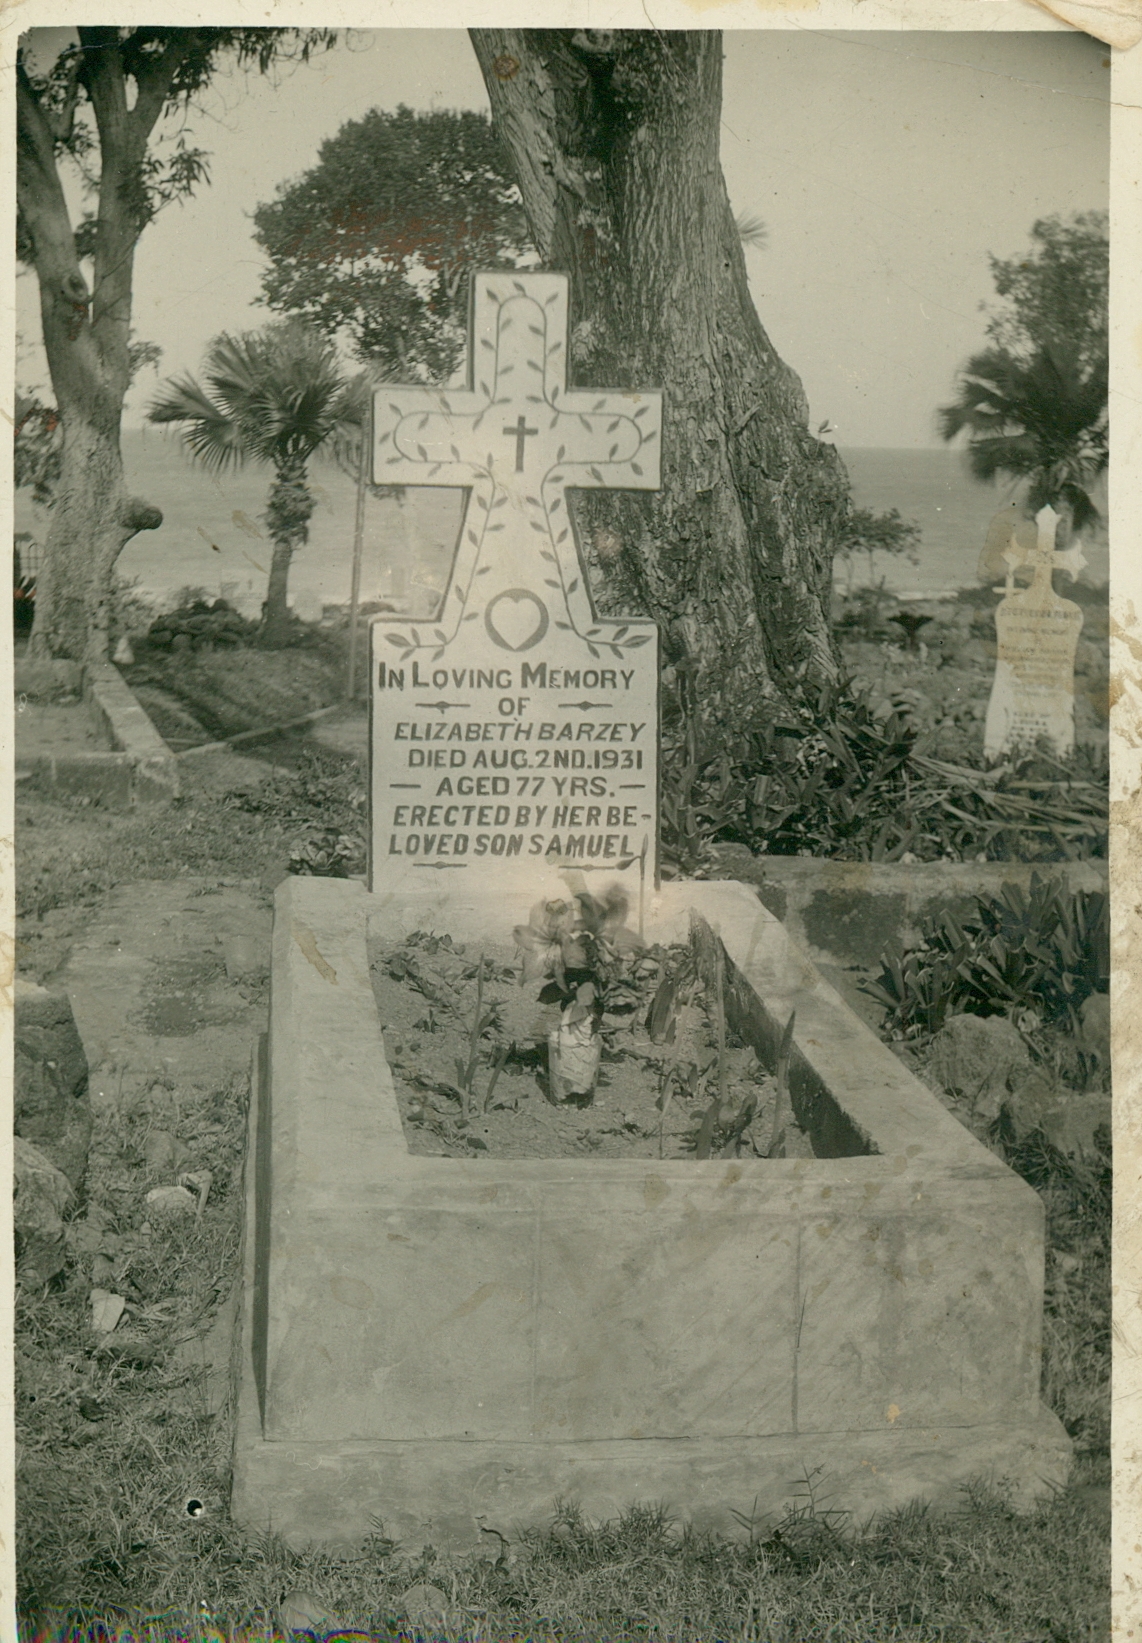 Elizabeth Barzey headstone. Elizabeth Barzey was Aubrey J. Weeks' maternal grandmother.